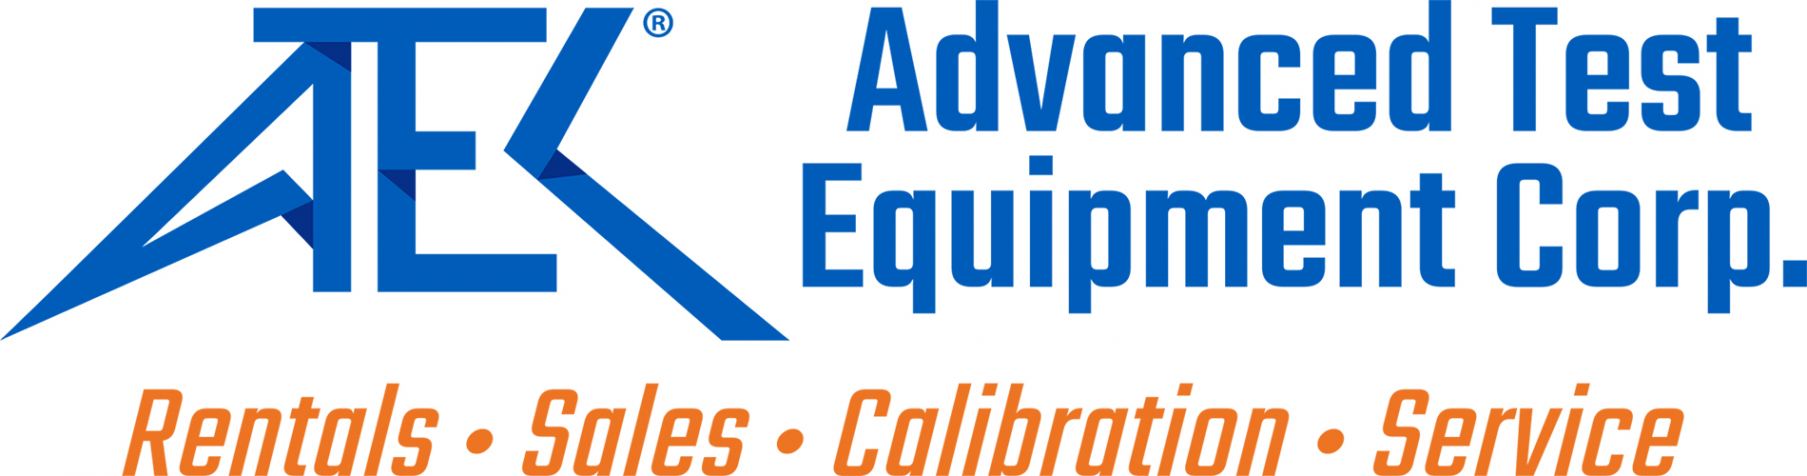 Advanced Test Equipment Corporation logo